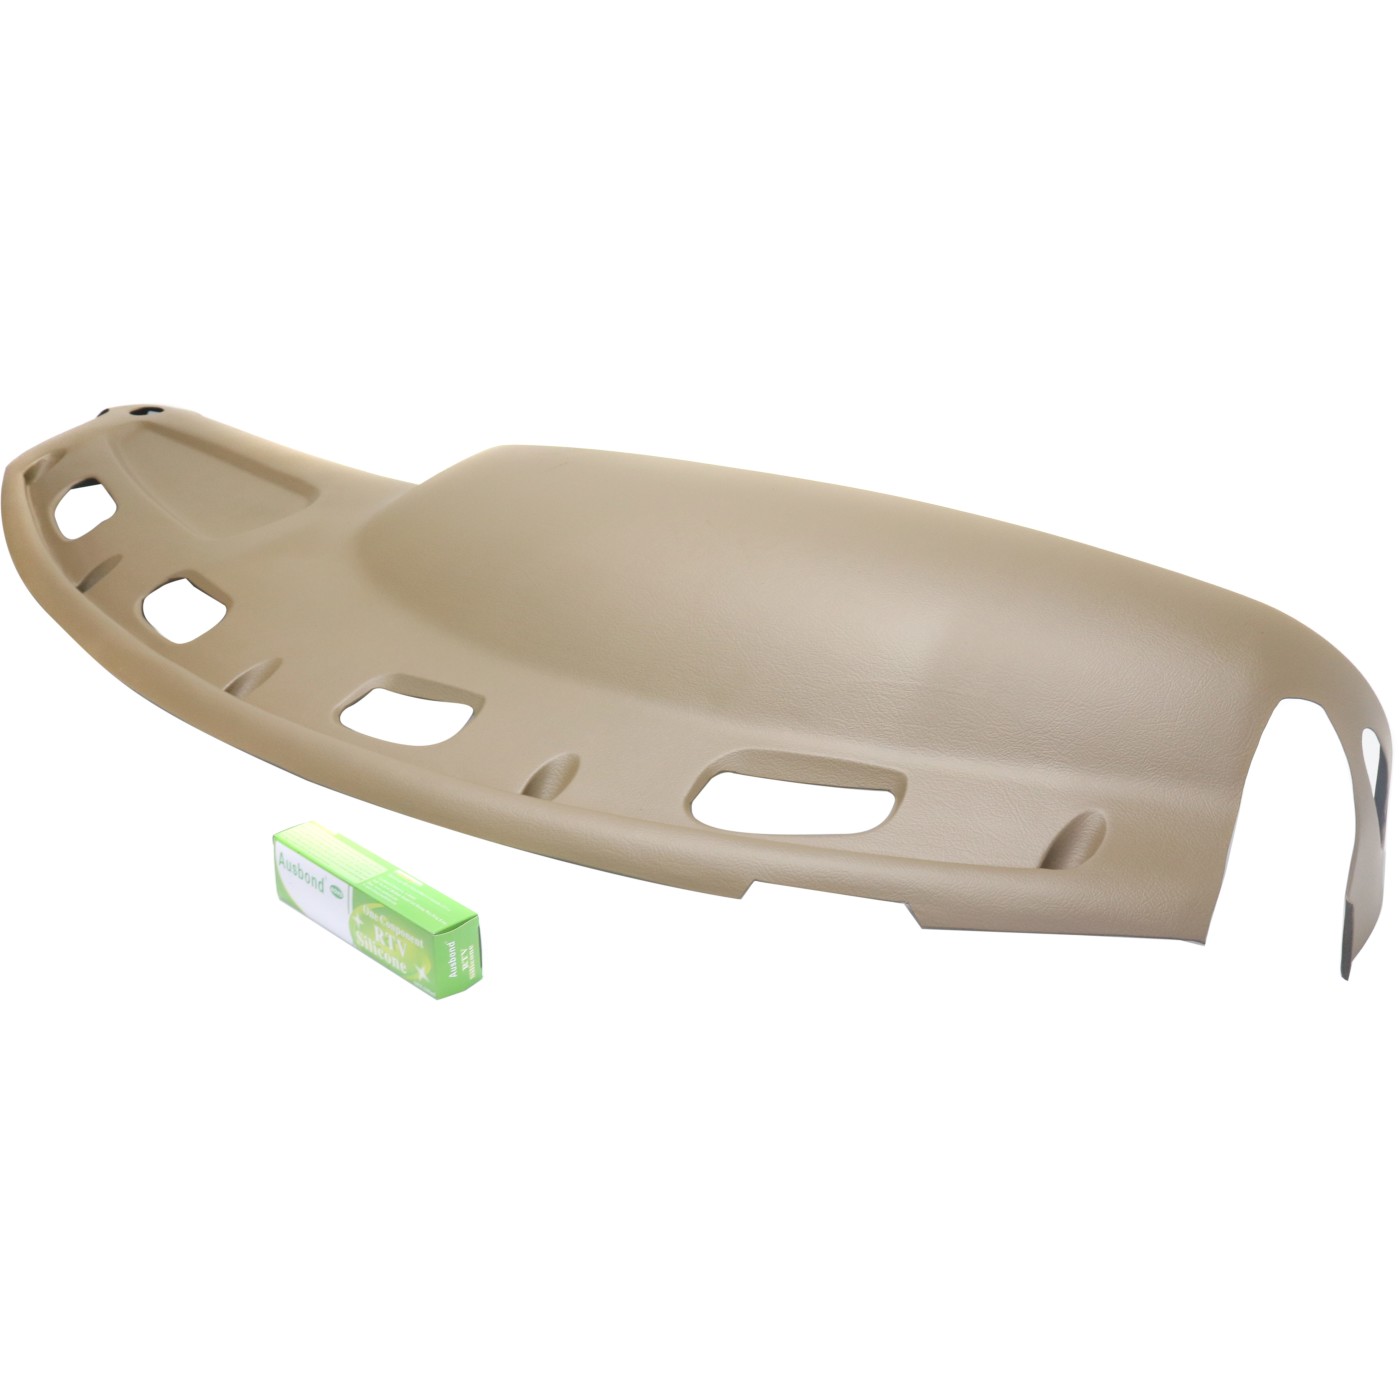 Molded Plastic Saddle Tan Dash Pad Cover Overlay Fits 9802 Dodge Ram 15003500 eBay